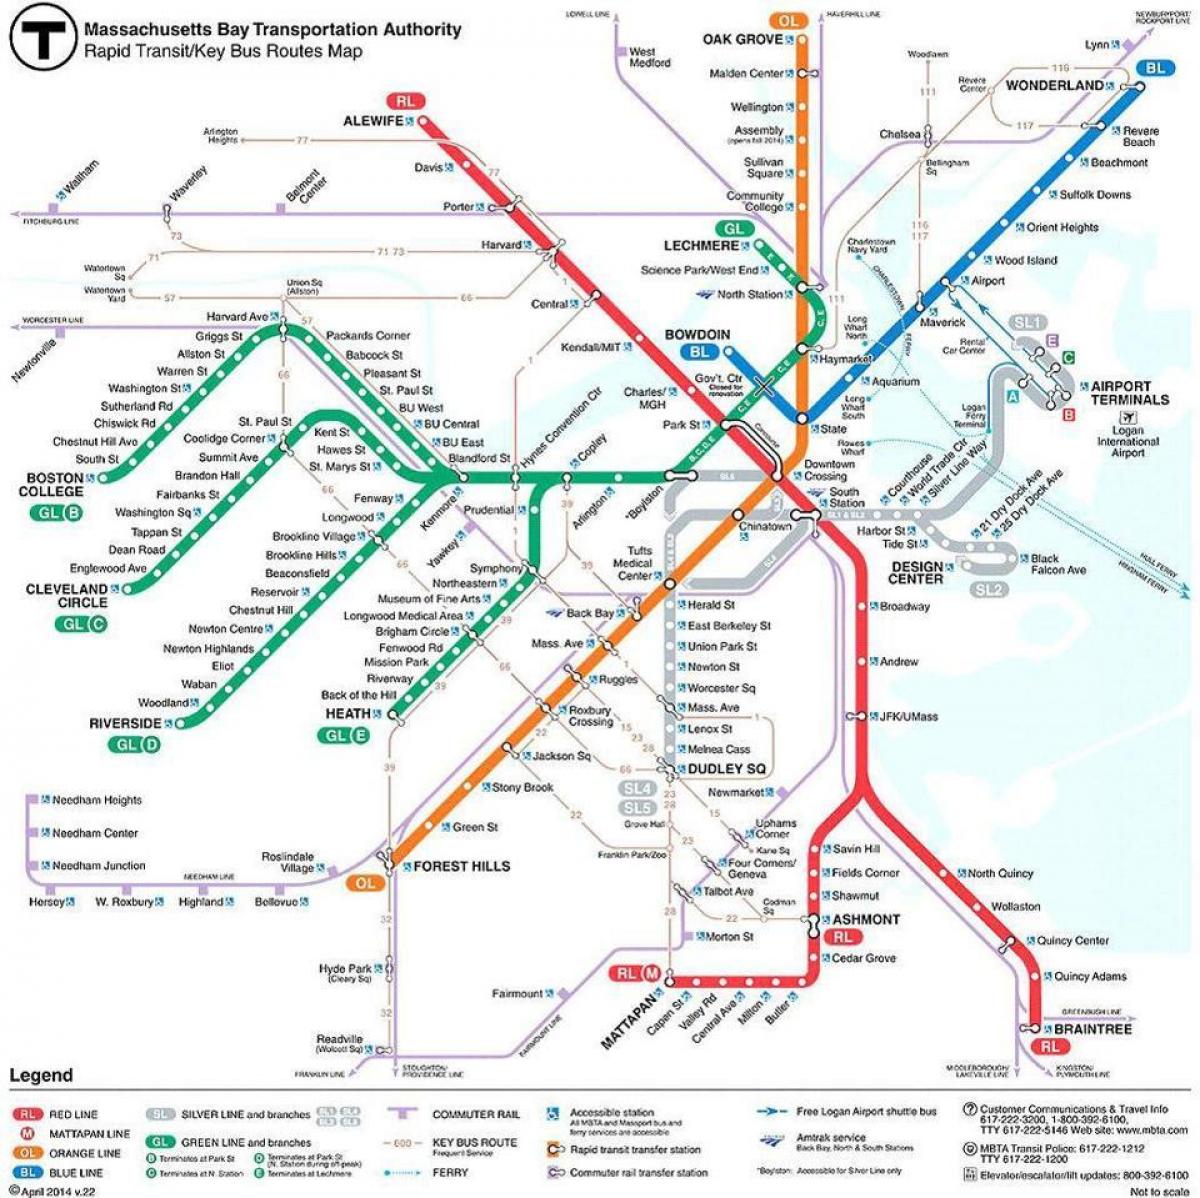 MBTA Boston რუკა